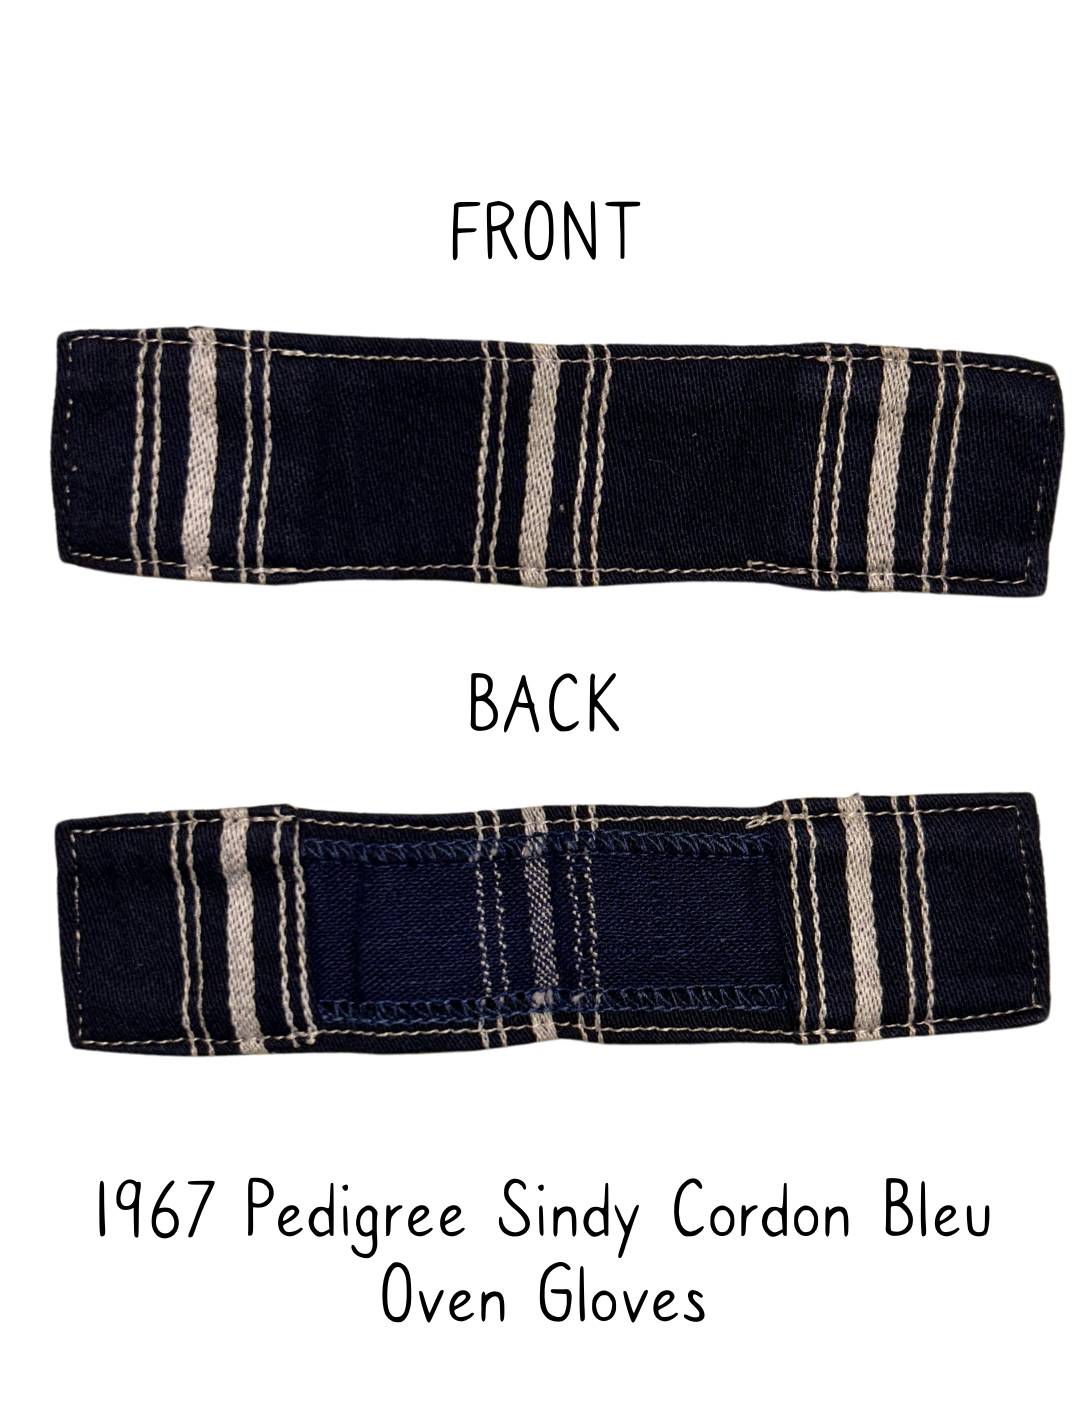 1967 Pedigree Sindy Fashion Doll Cordon Bleu Oven Gloves